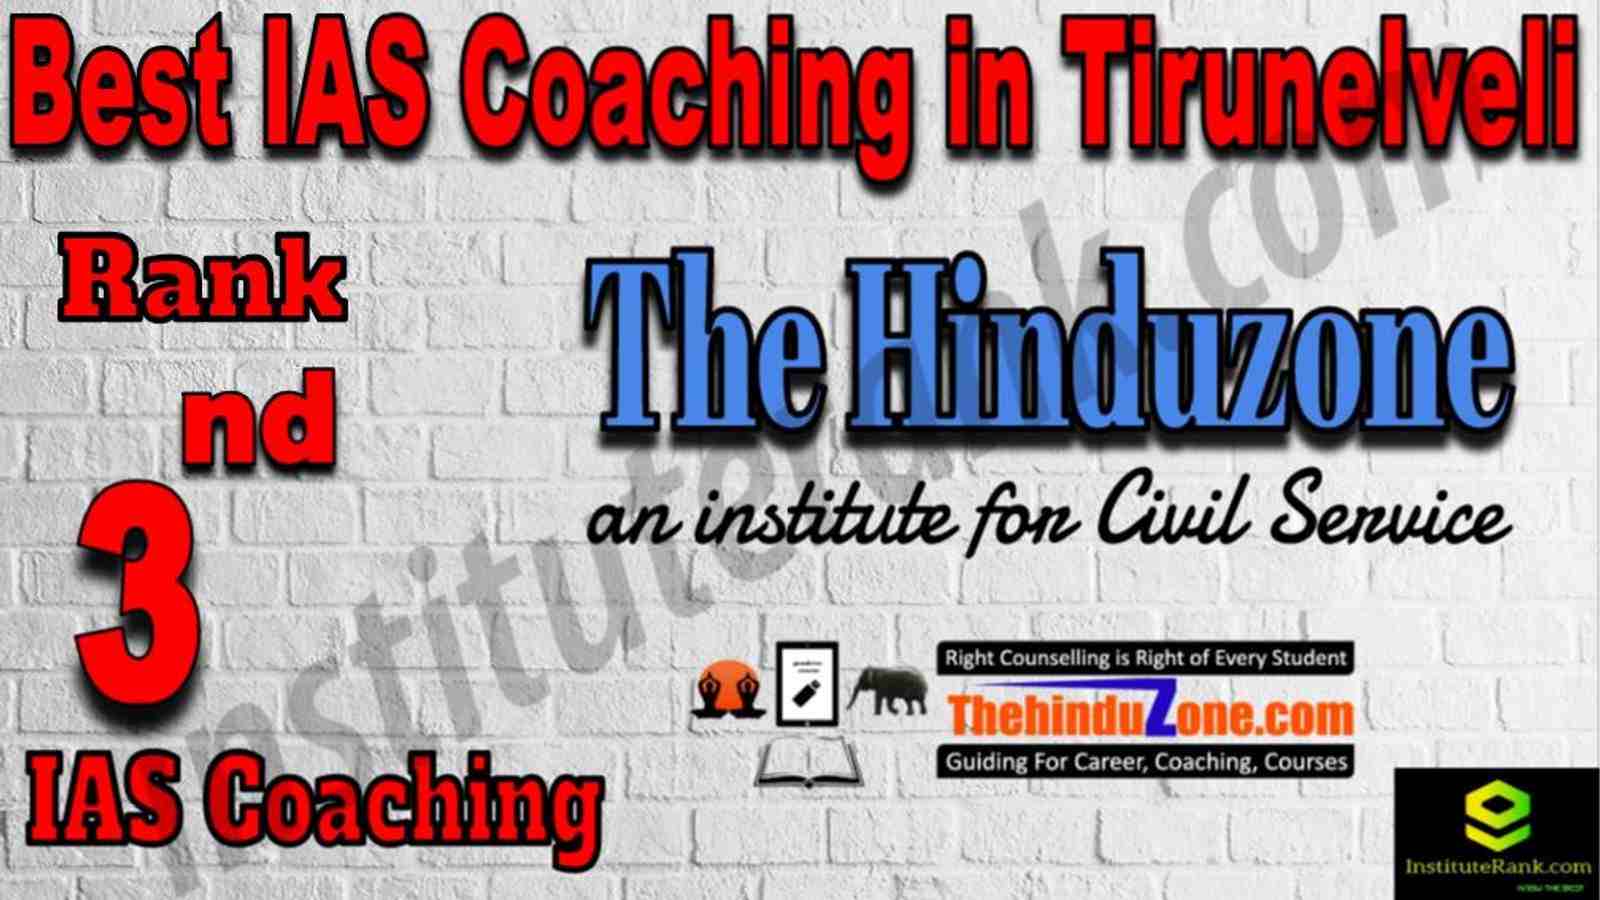 3rd Best IAS Coaching in Tirunelveli